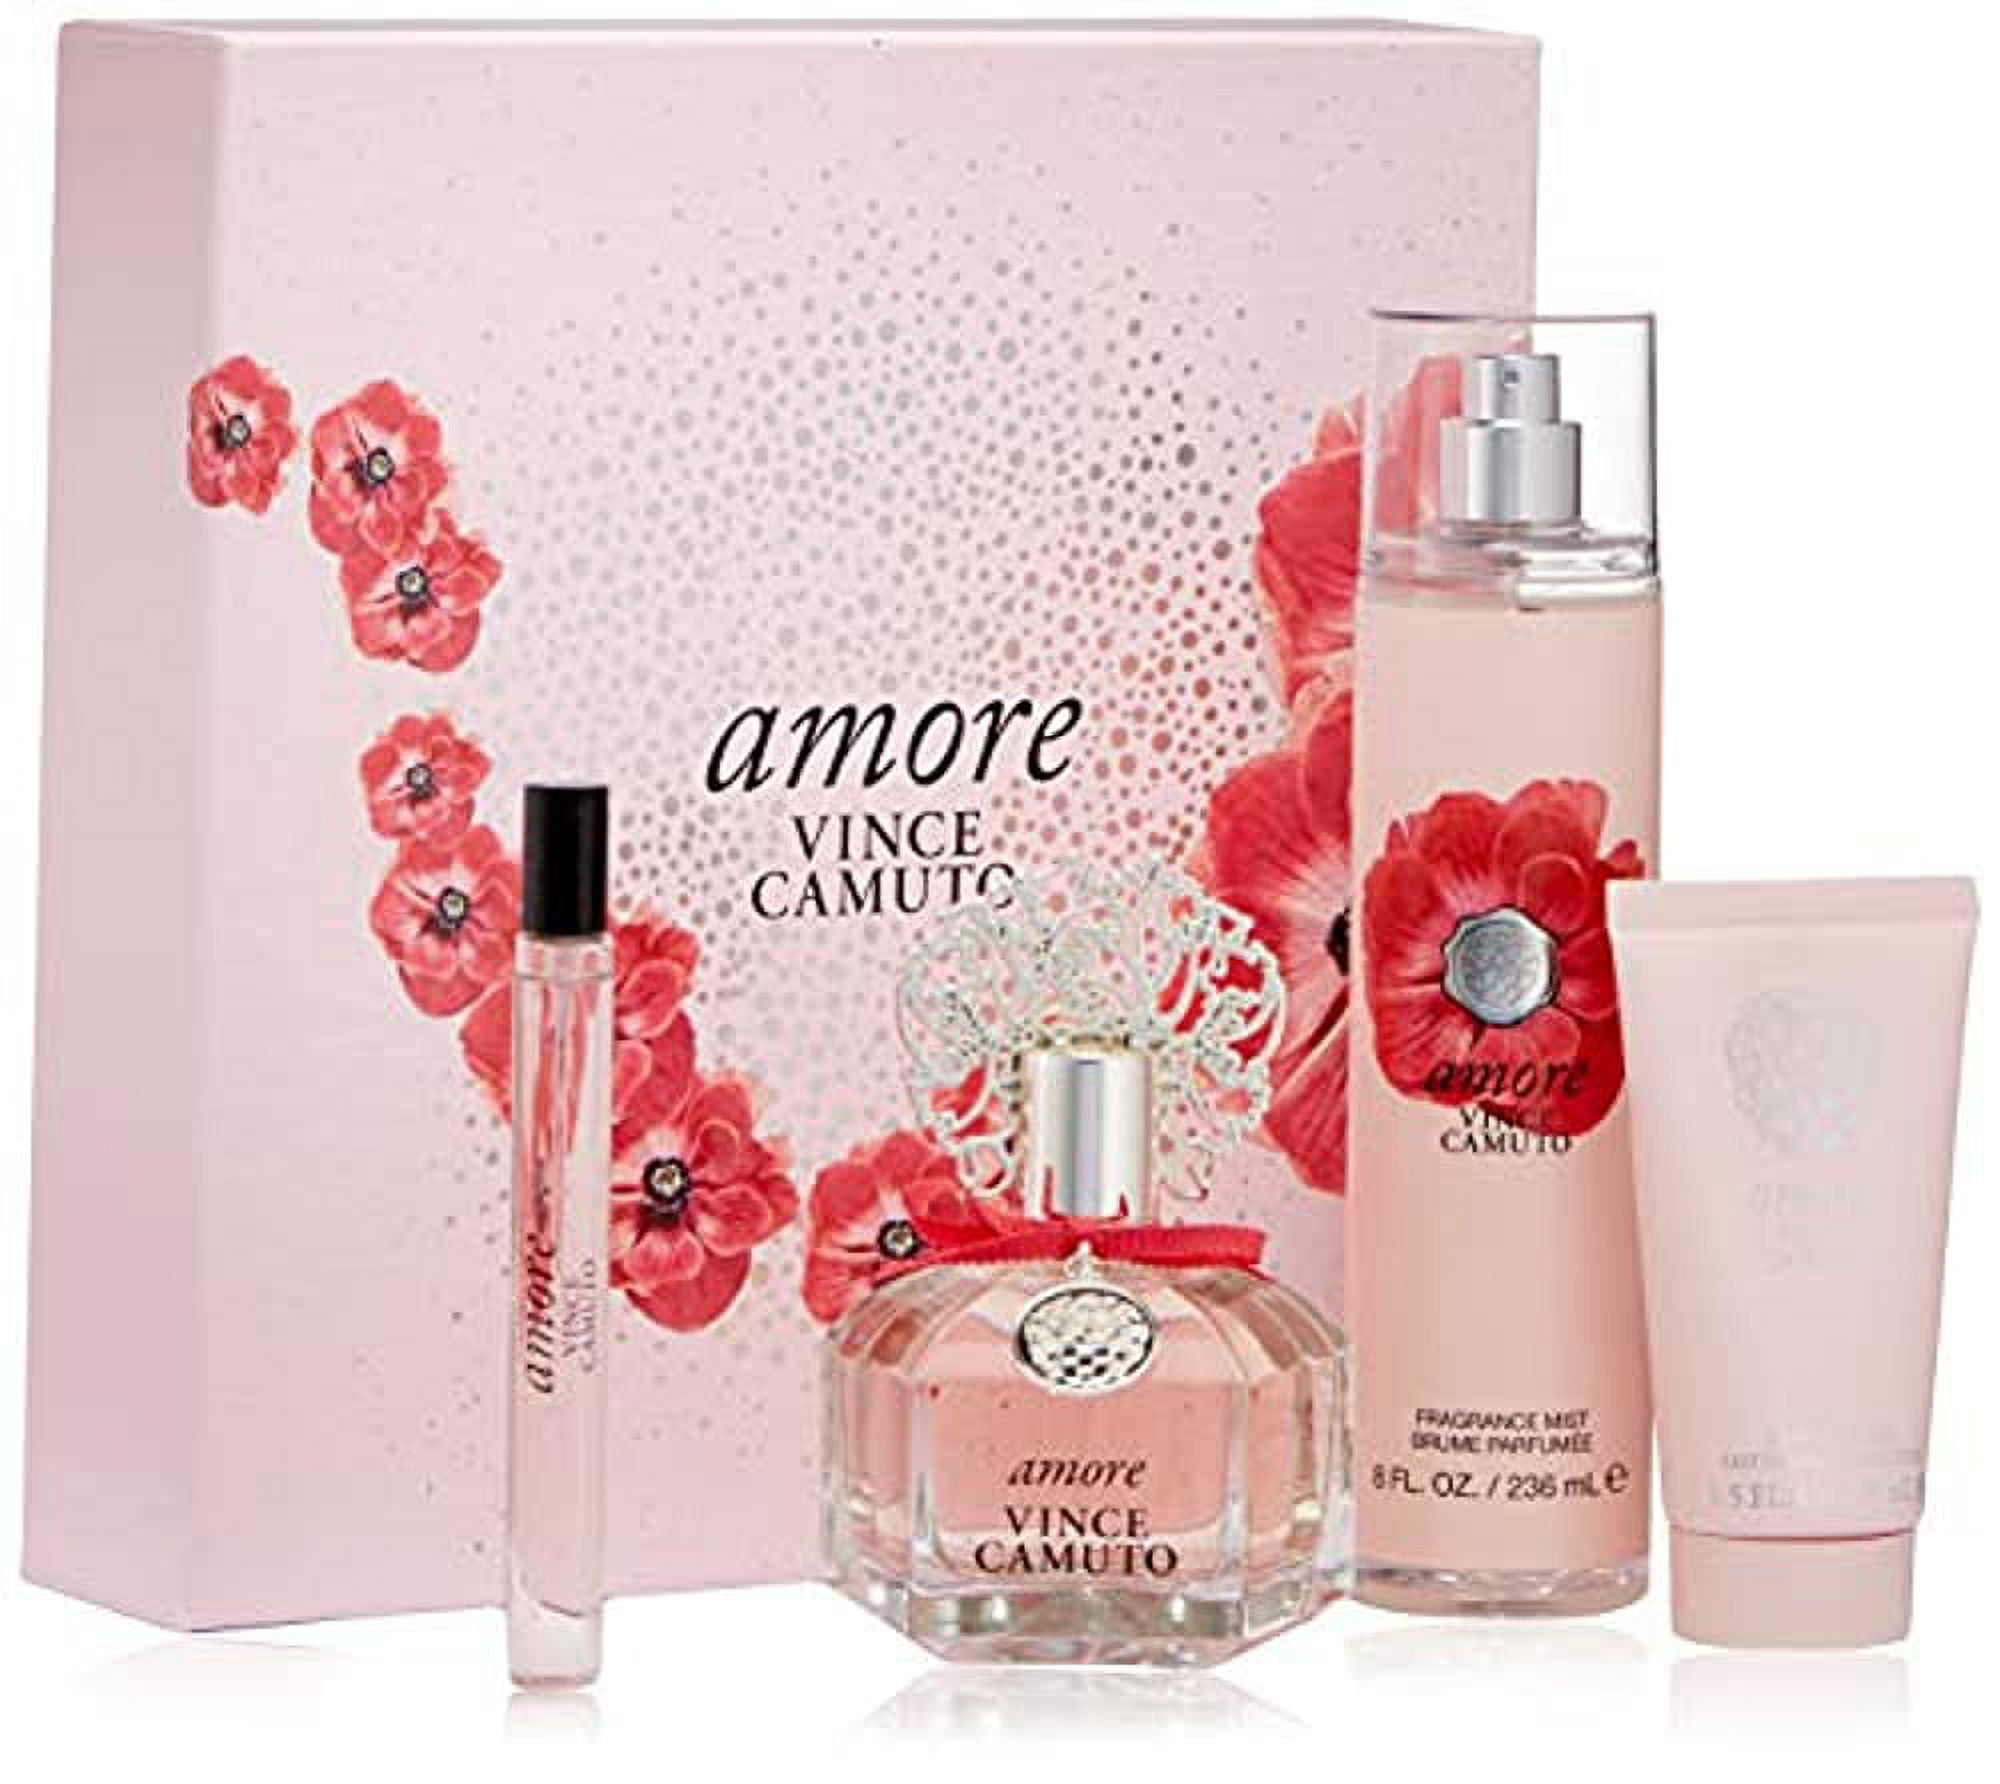 Vince Camuto Amore Parfum Travel Spray .34Oz.10 ML. women stocking gift